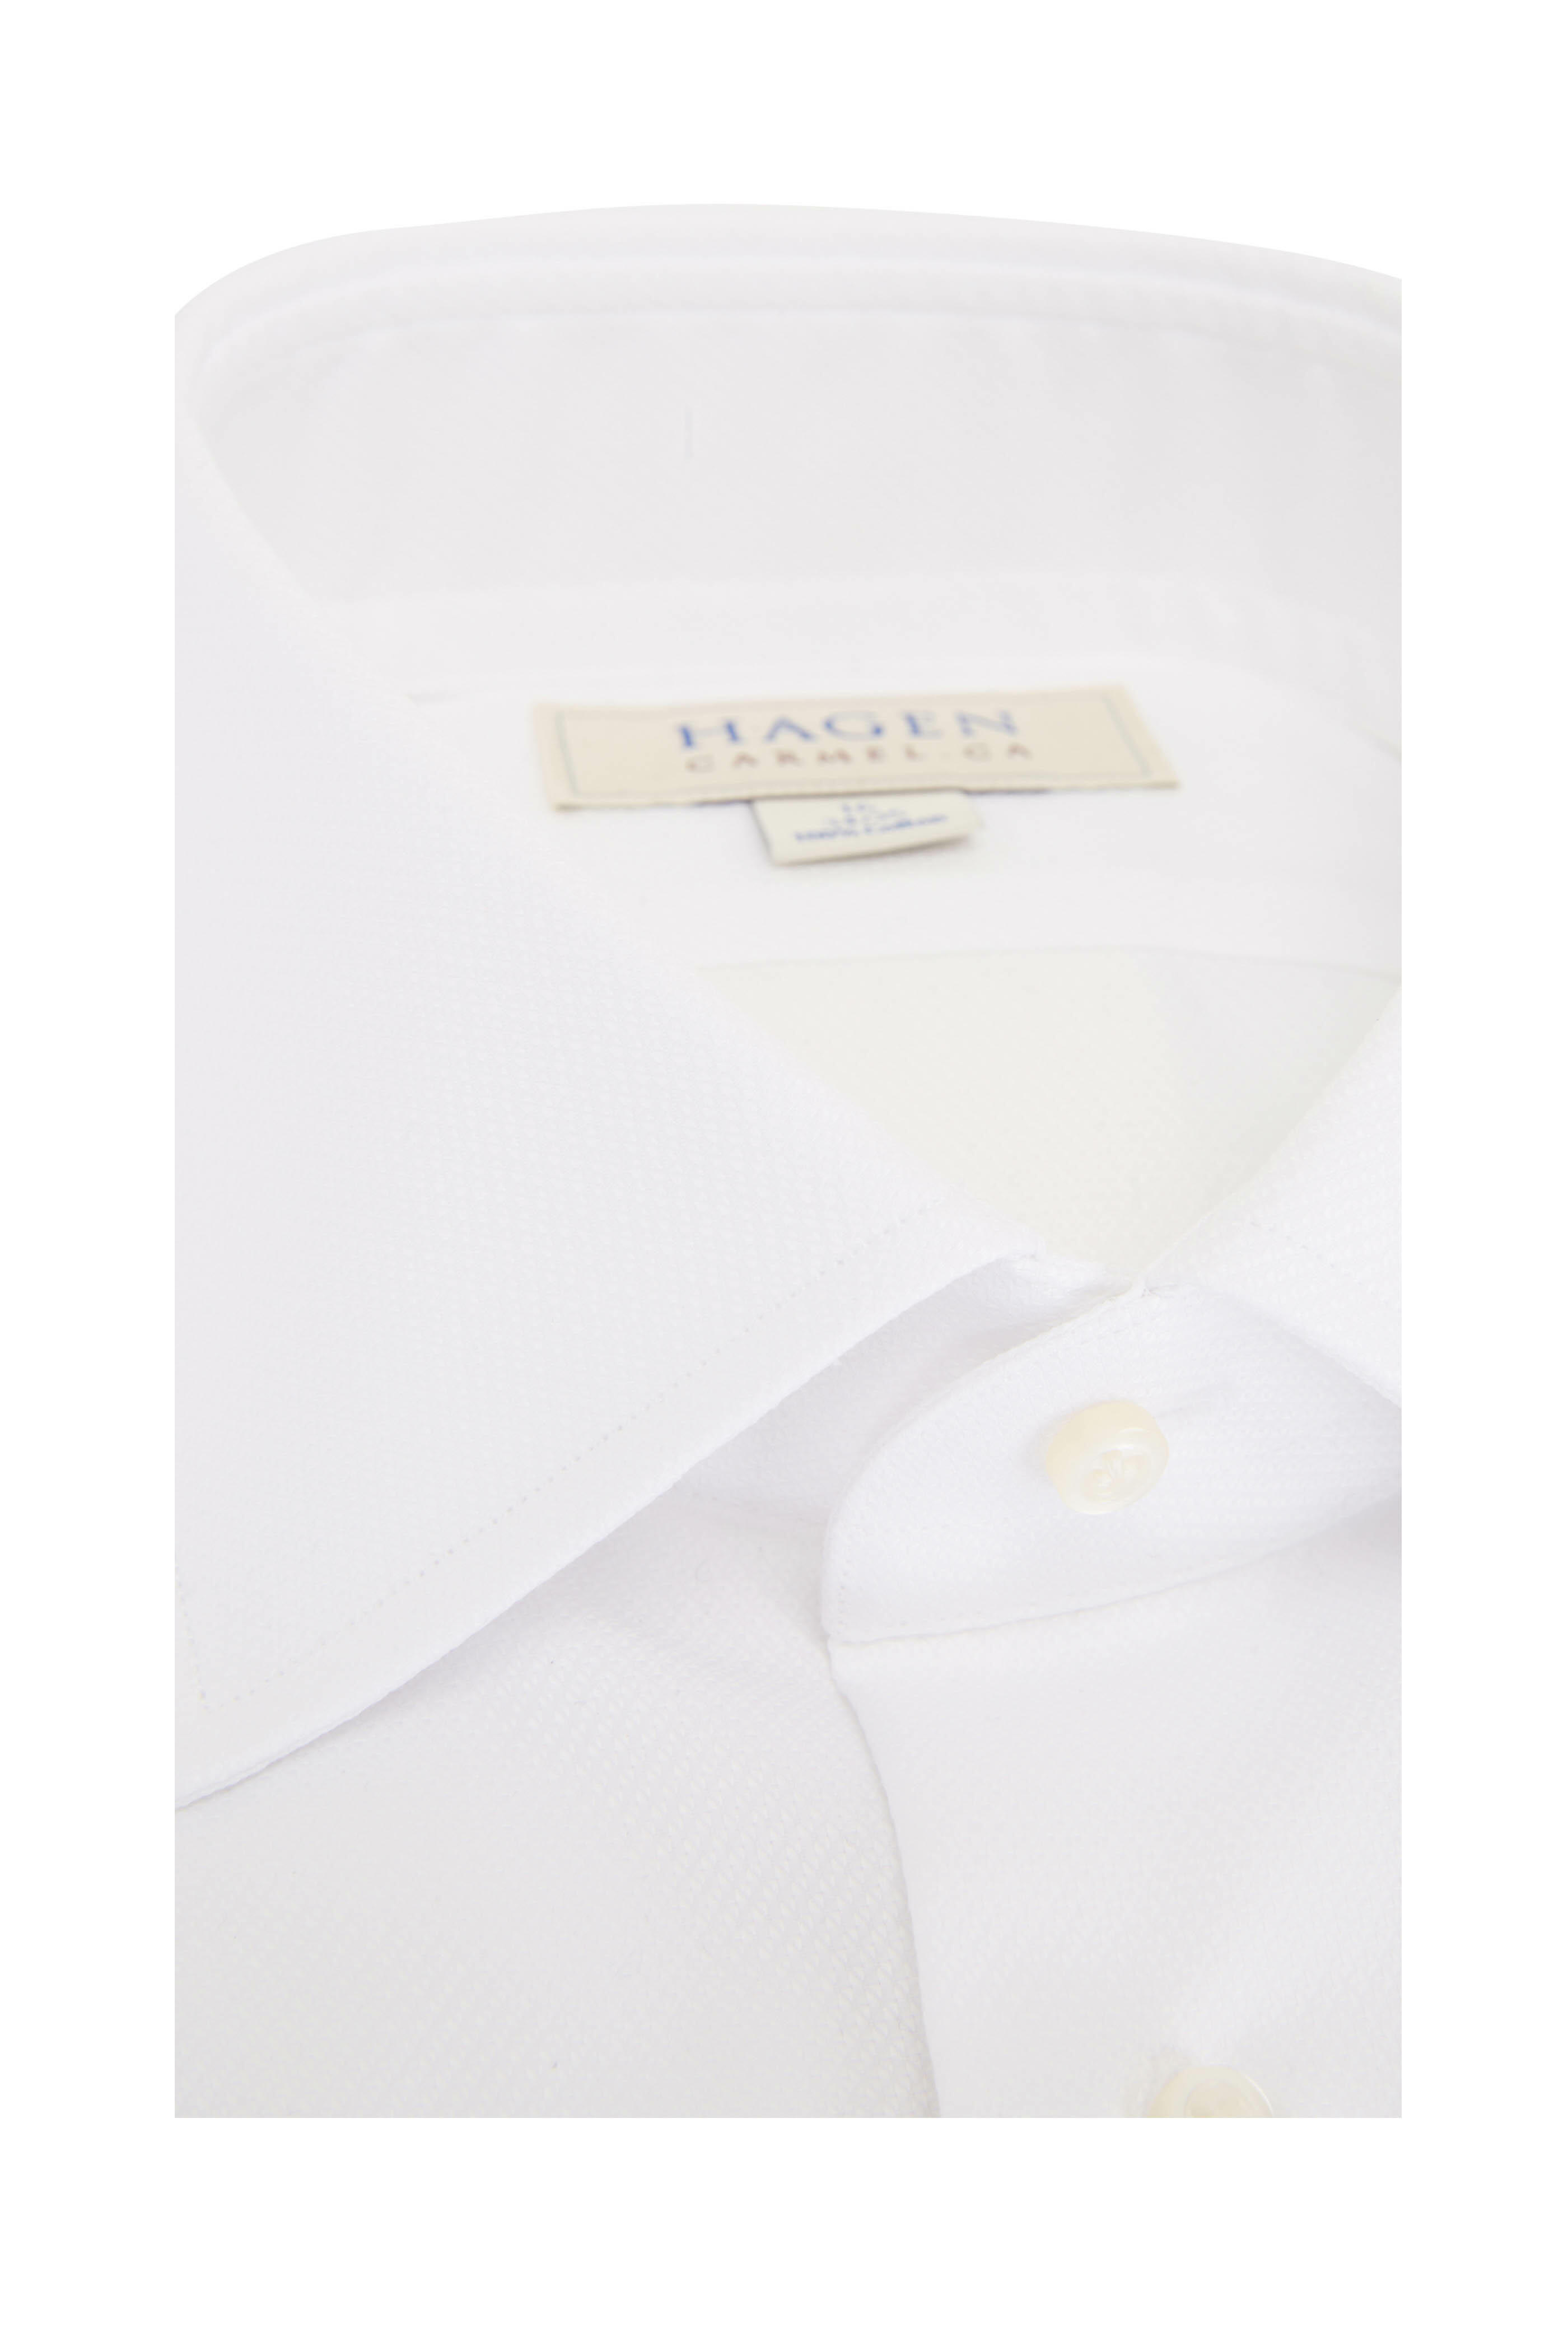 Hagen Shirts - White Textured Cotton Dress Shirt